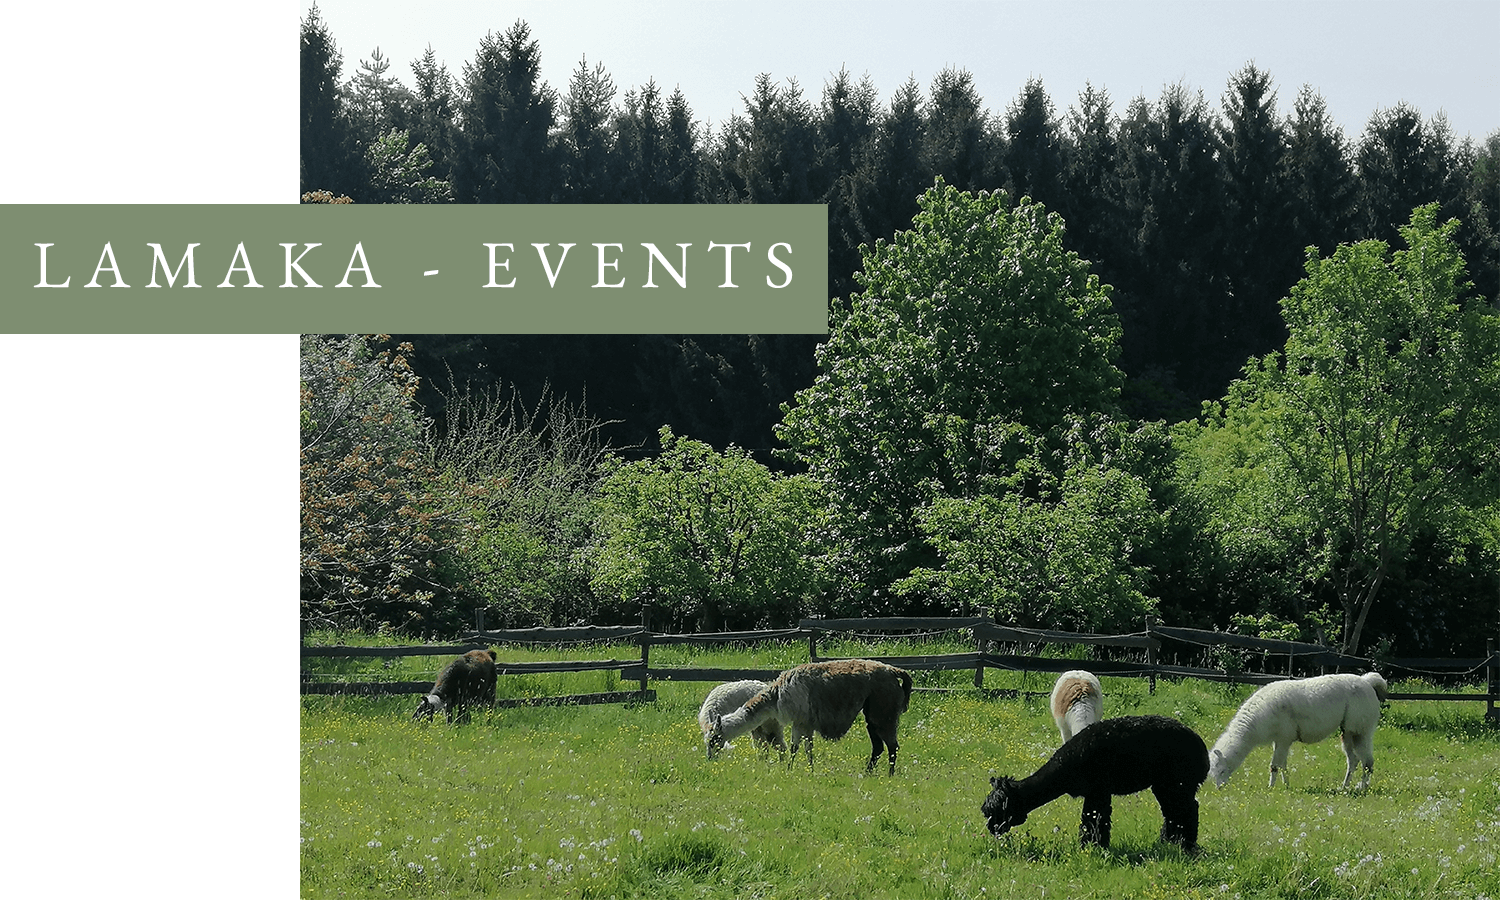 Lamaka-Events à la Hof Elderbusch